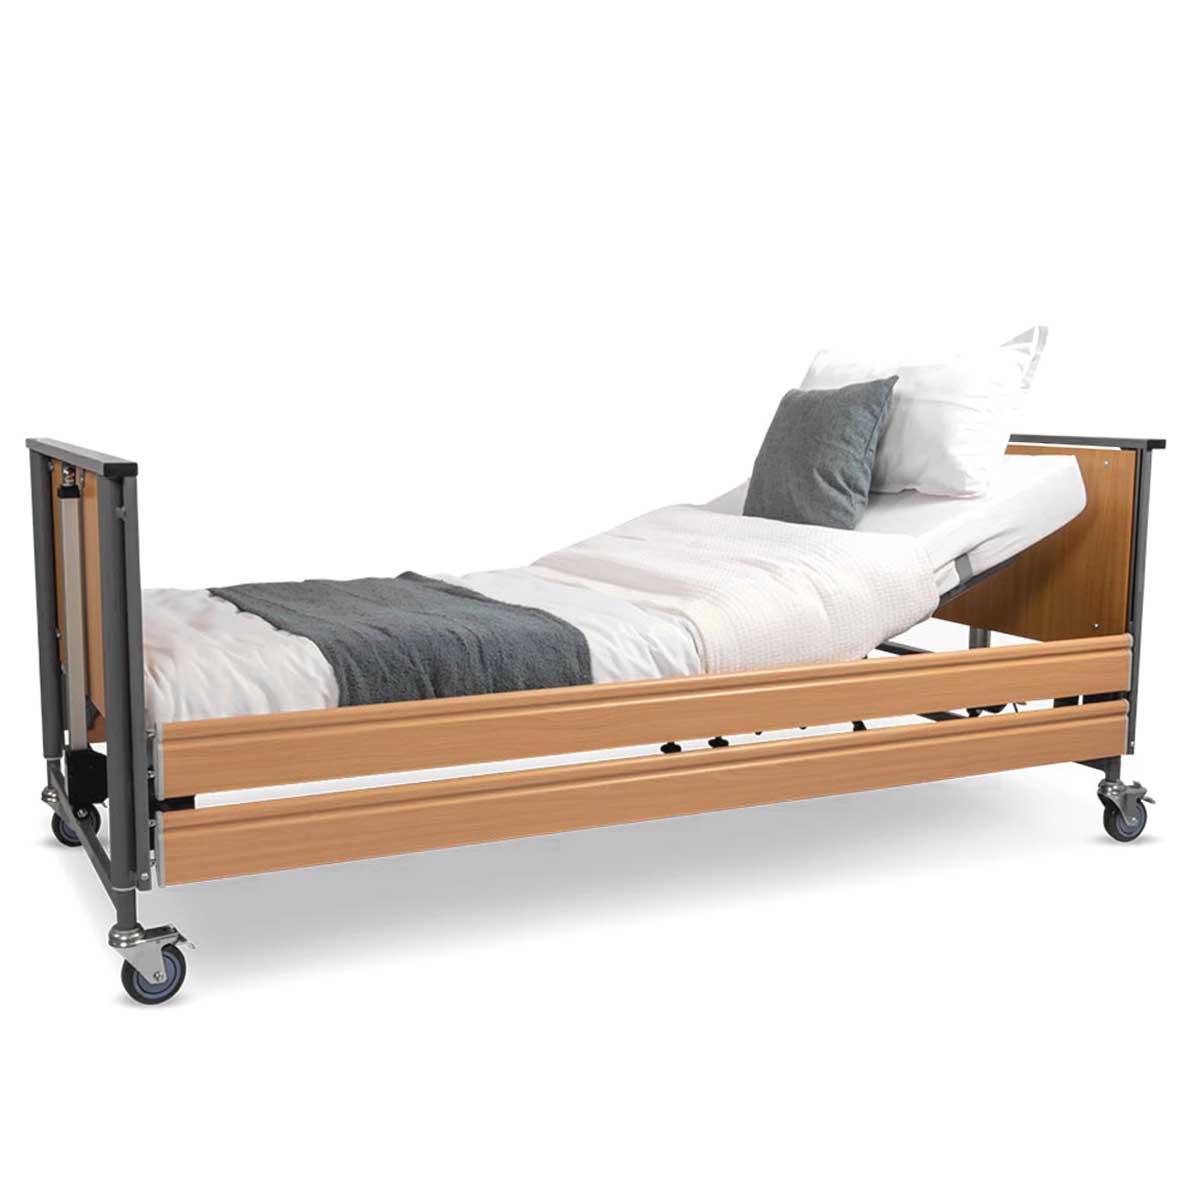 Pflegebett Eco-BiB, Bett im Bett System